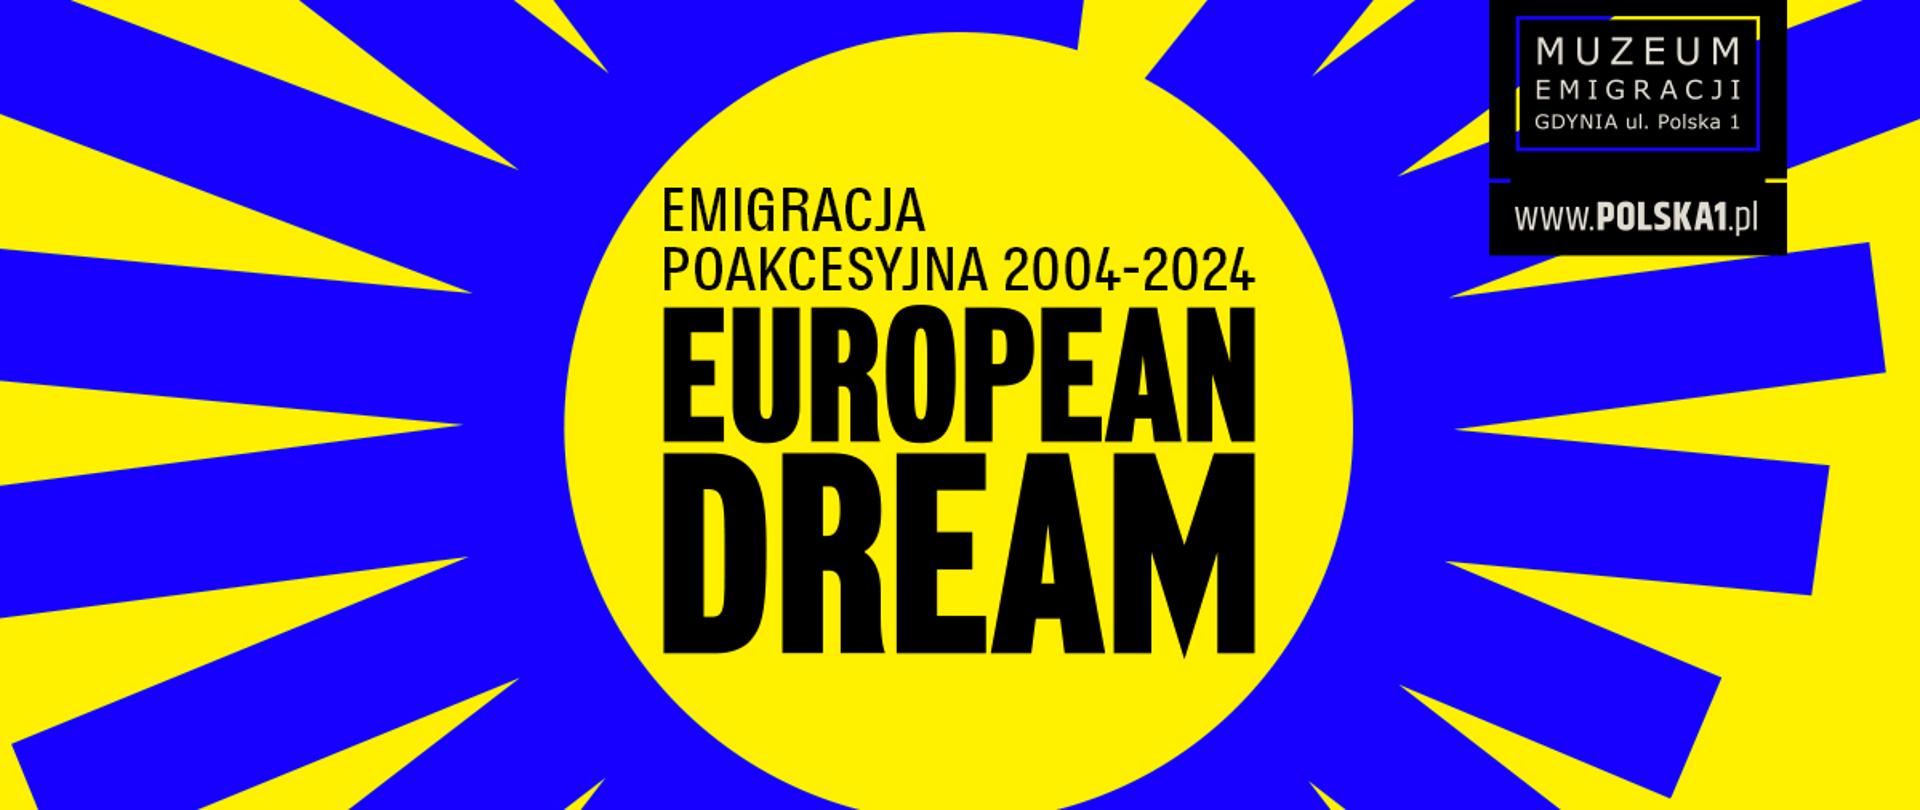 European Dream. Emigracja poakcesyjna 2004-2024.